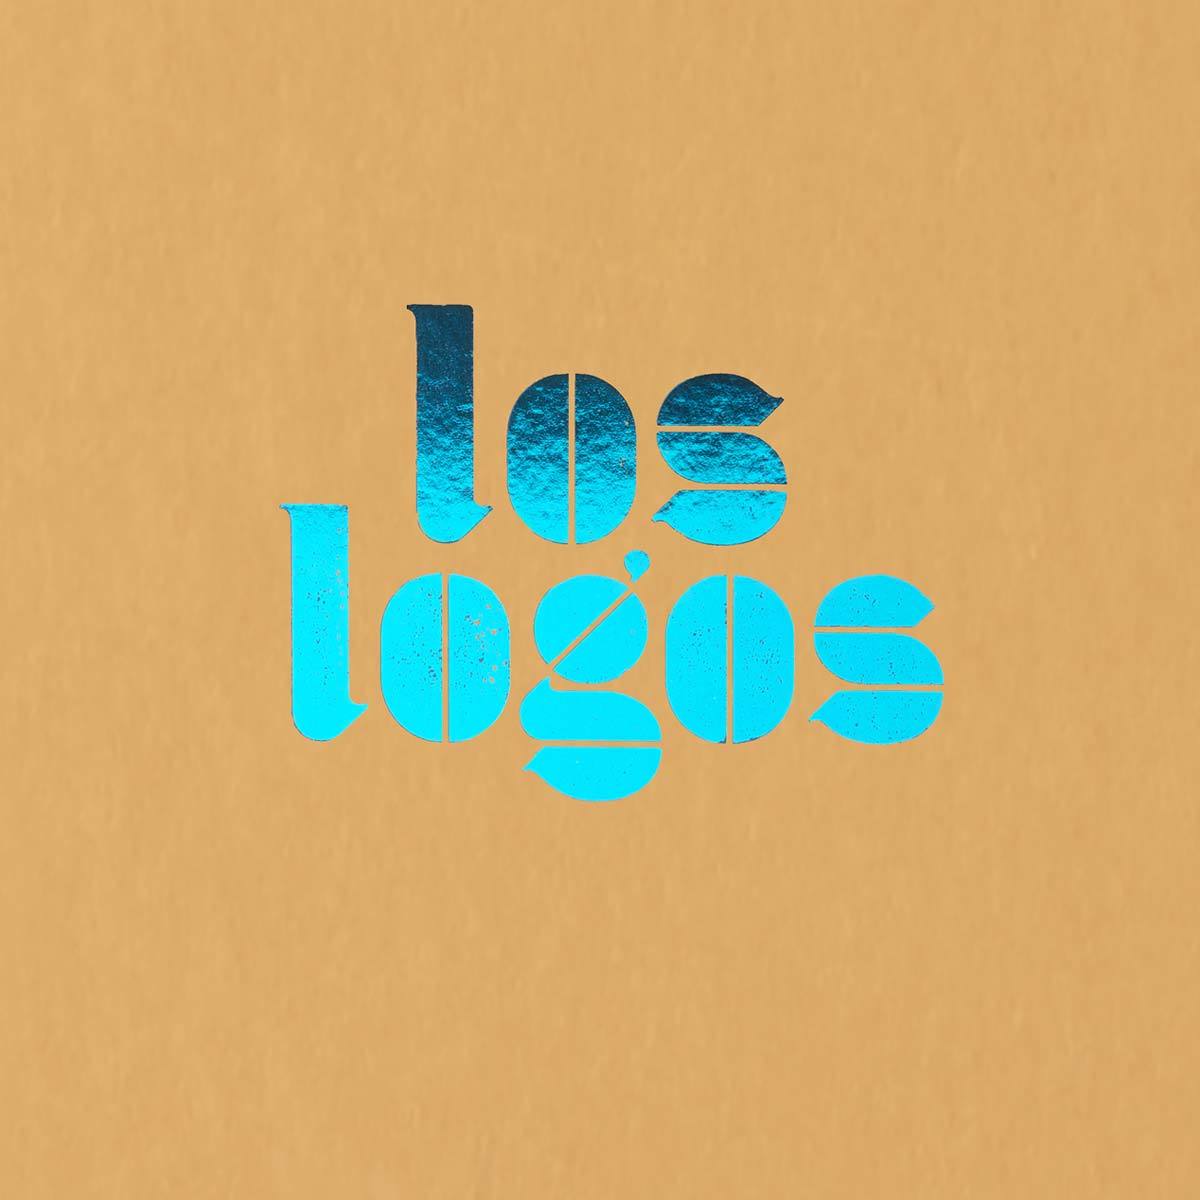 Los Logos Compass Publikation 0 MHG Bern / Grafikdesign